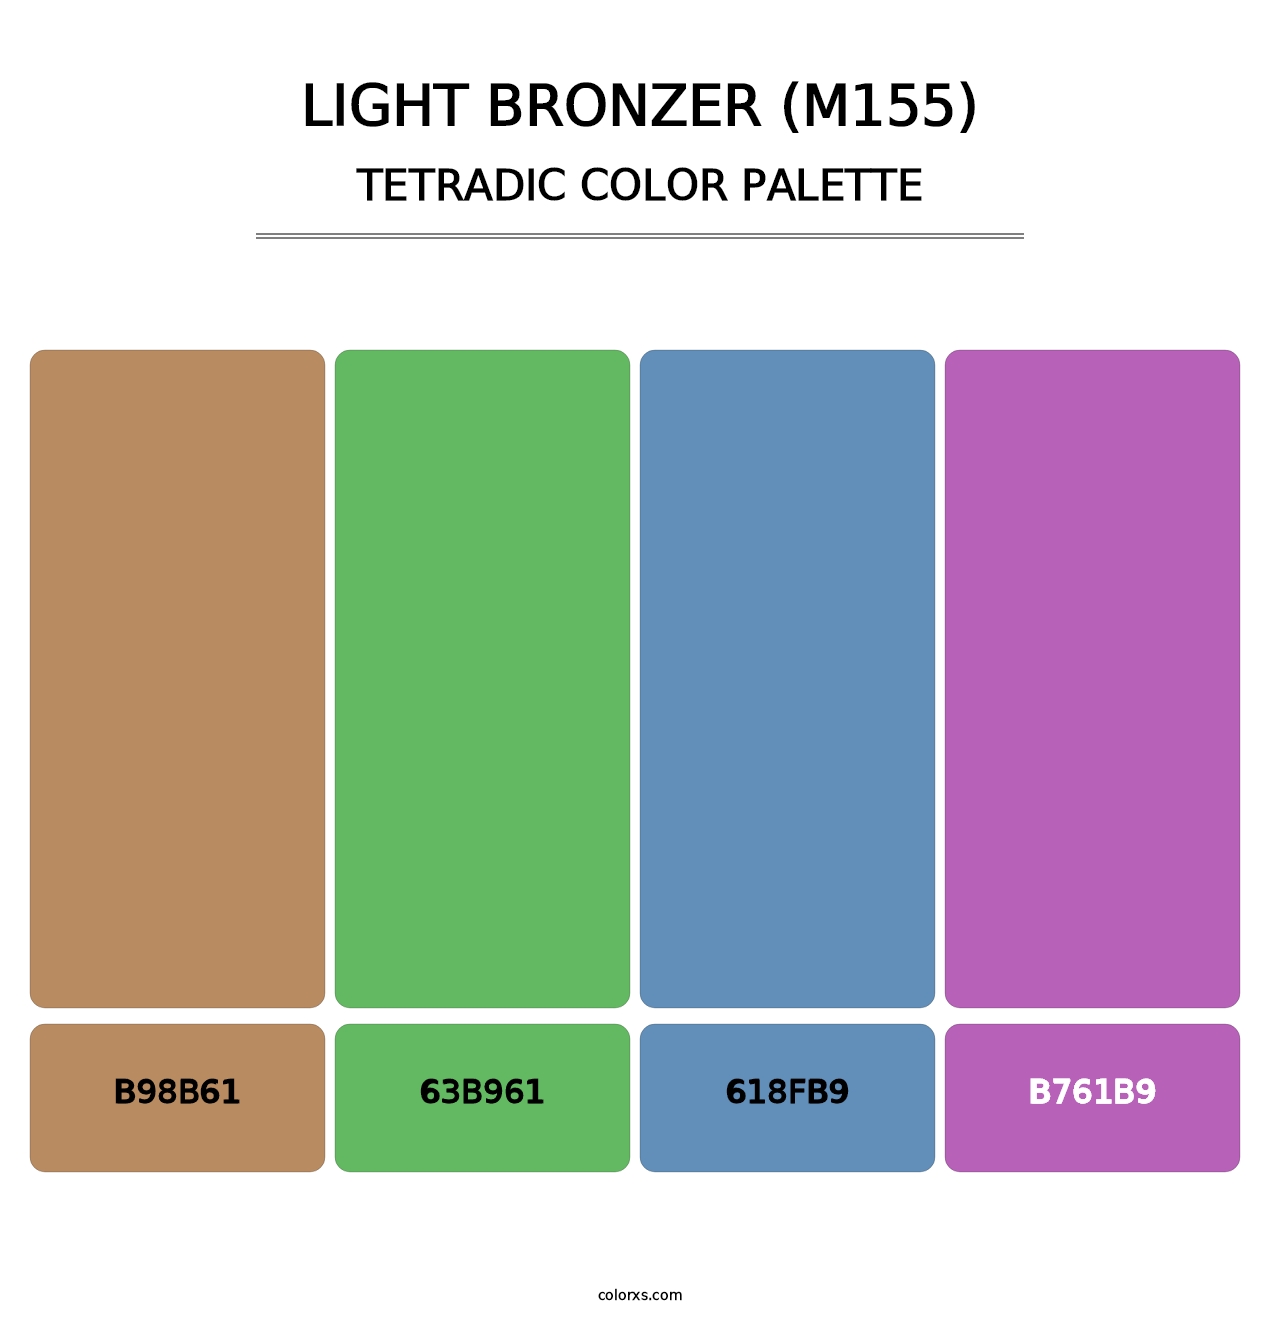 Light Bronzer (M155) - Tetradic Color Palette